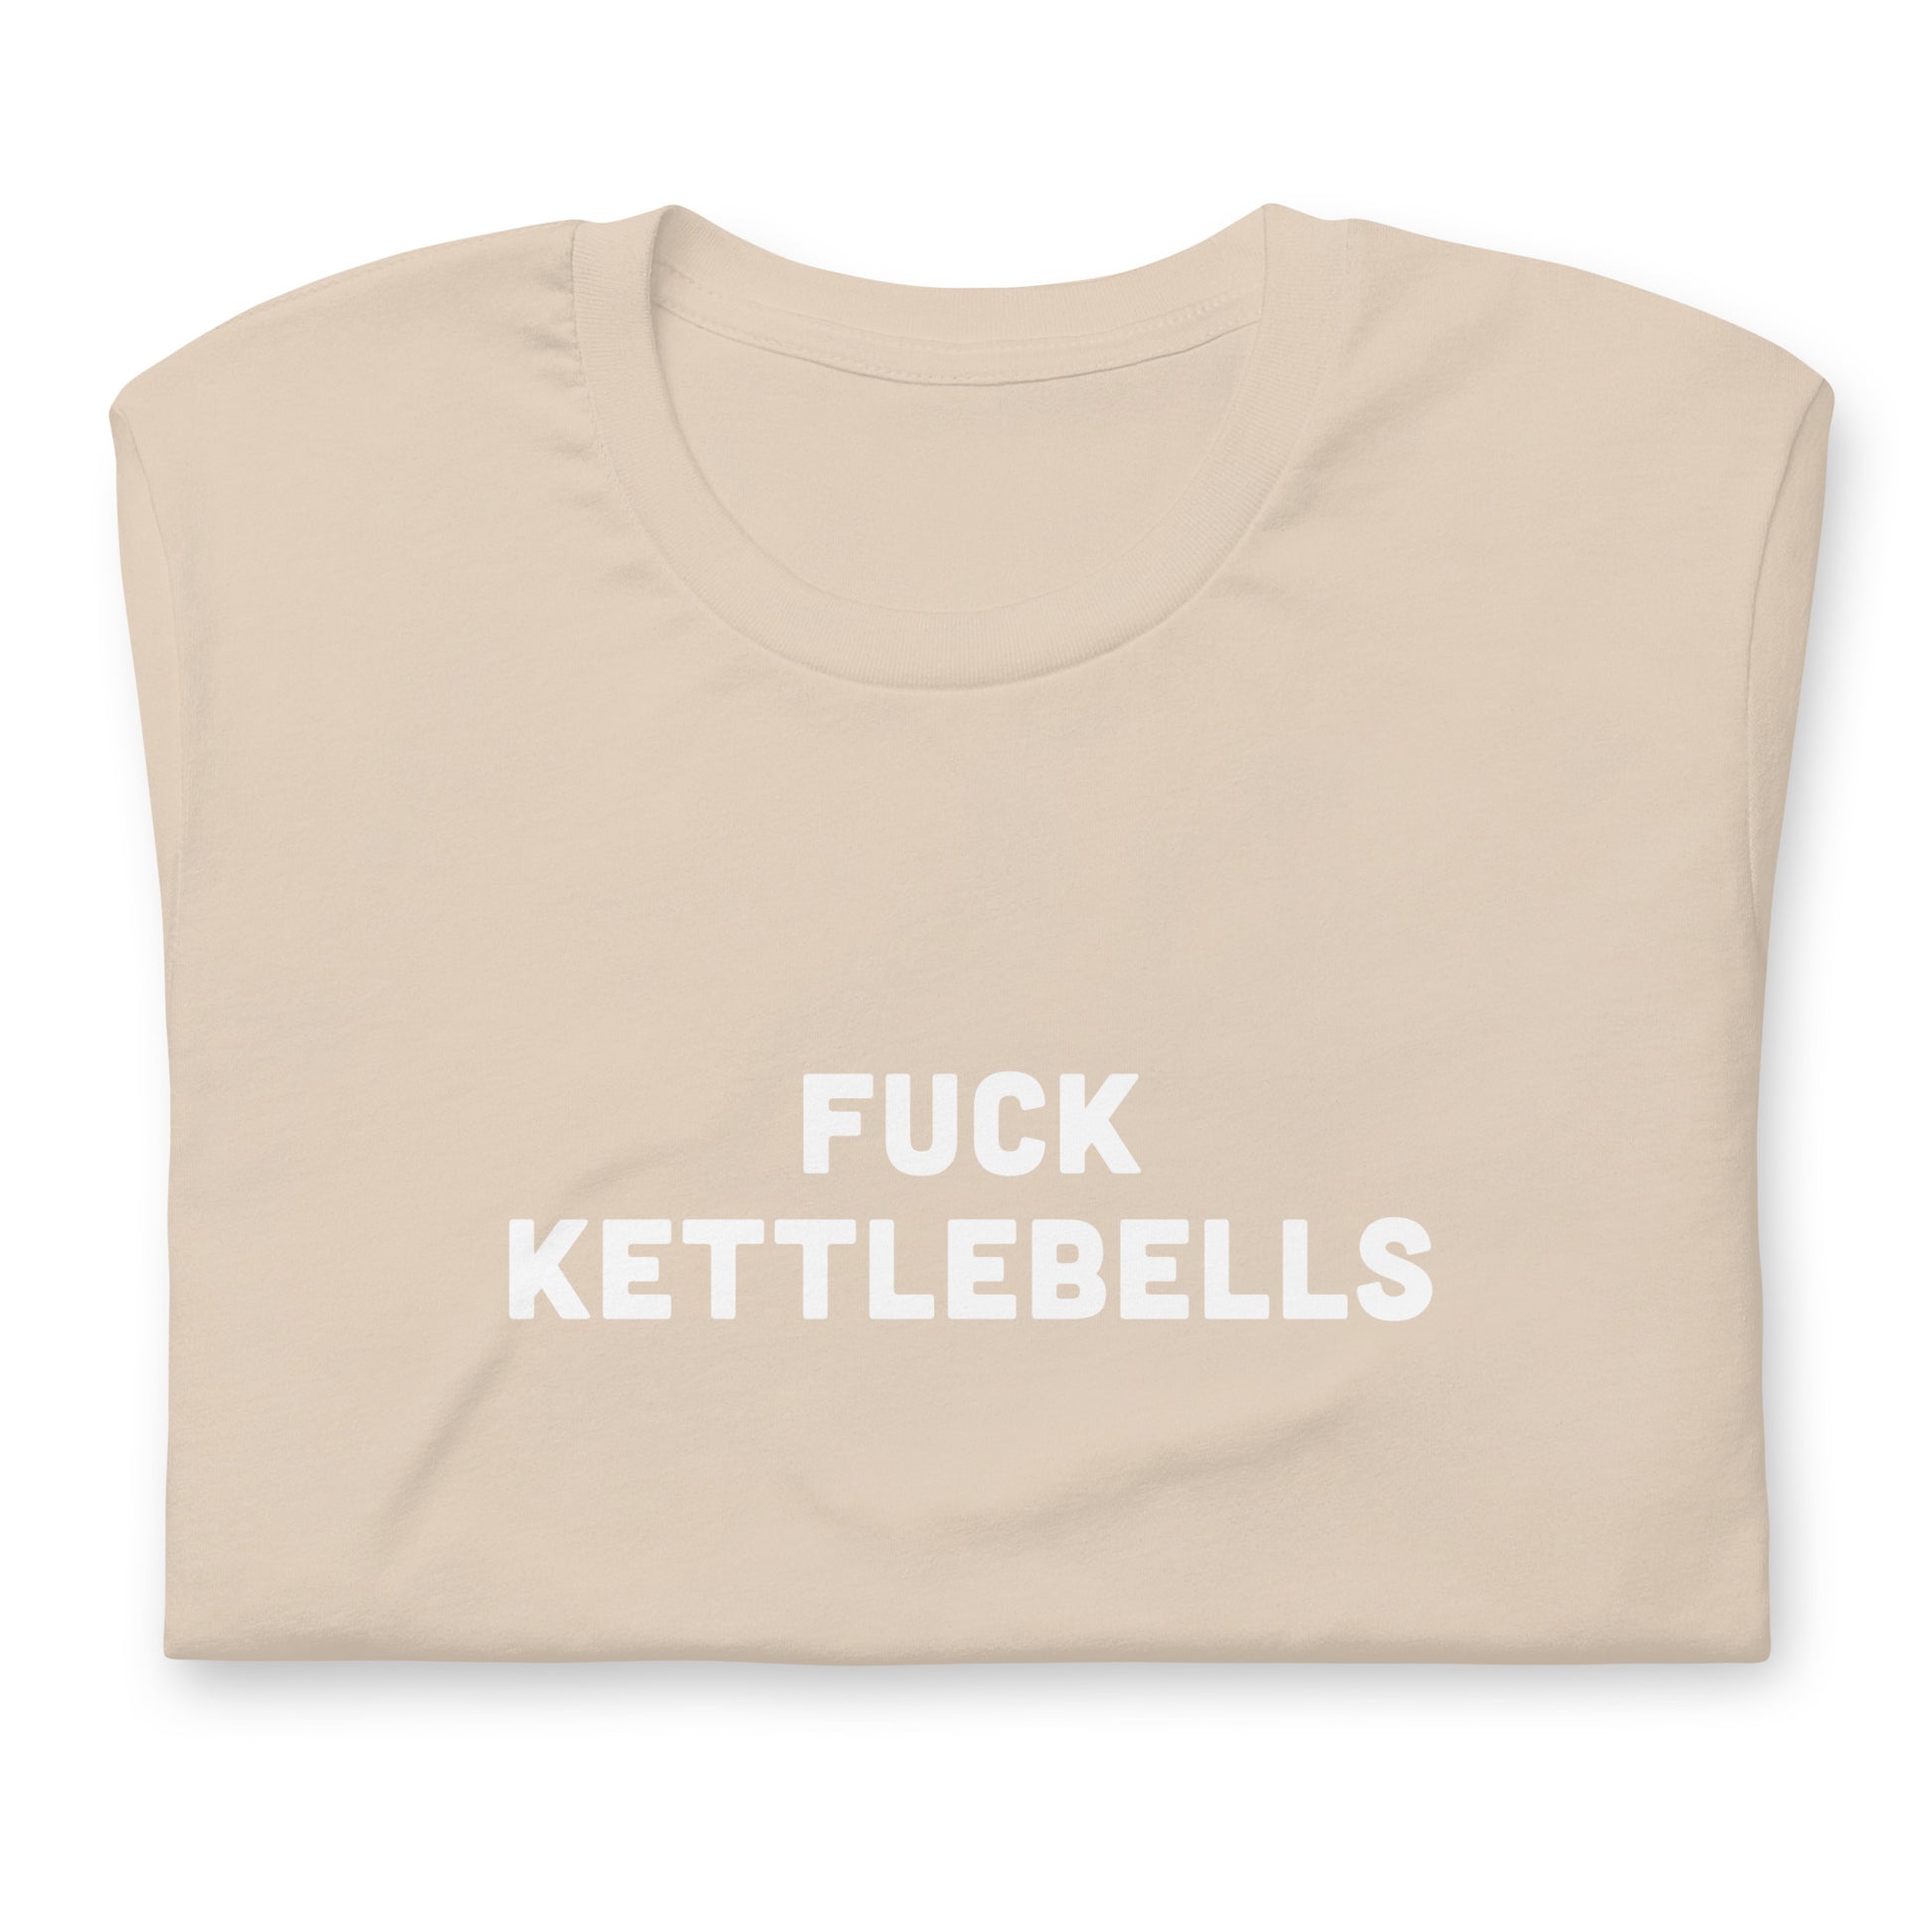 Fuck Kettlebells T-Shirt Size L Color Asphalt